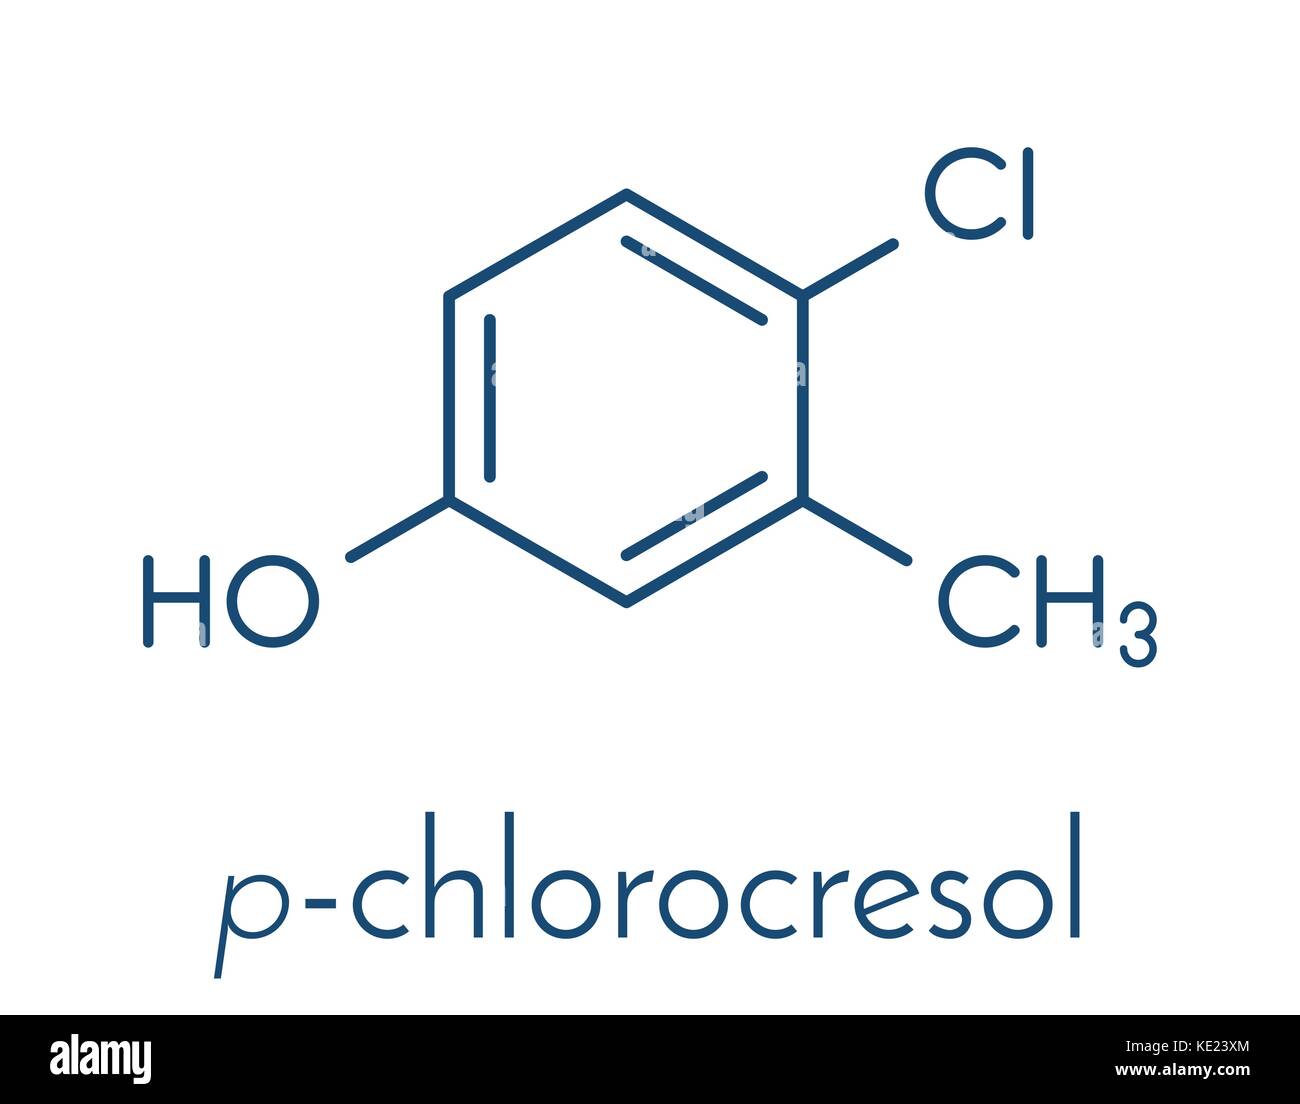 Chlorocresol (p-chlorocresol) Desinfektionsmittel und Konservierungsstoff Molekül. Skelettmuskulatur Formel. Stock Vektor